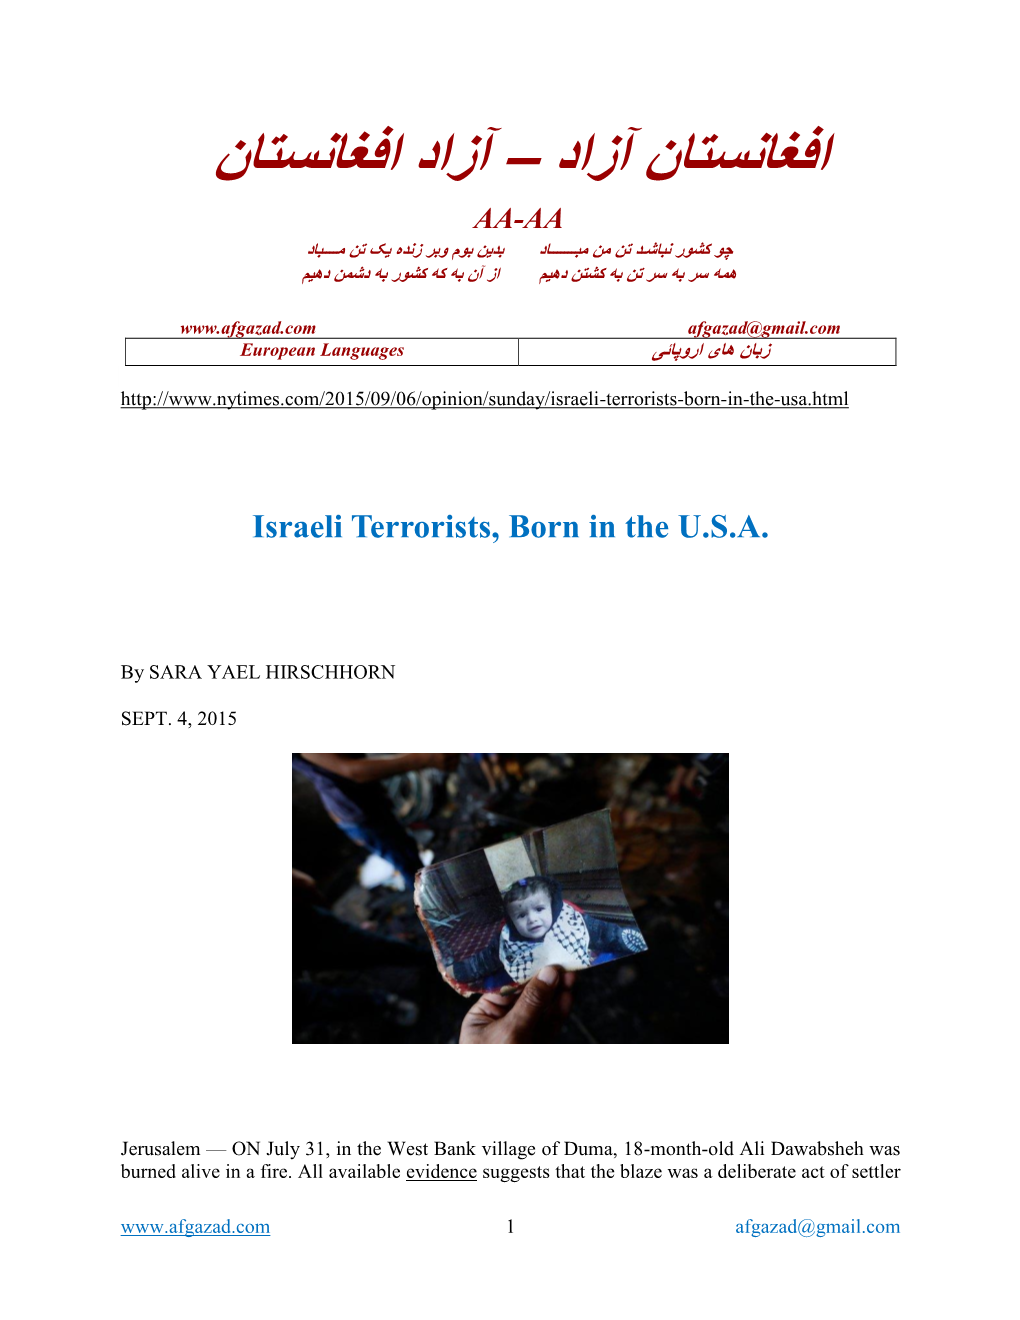 Israeli Terrorists, Born in the U.S.A